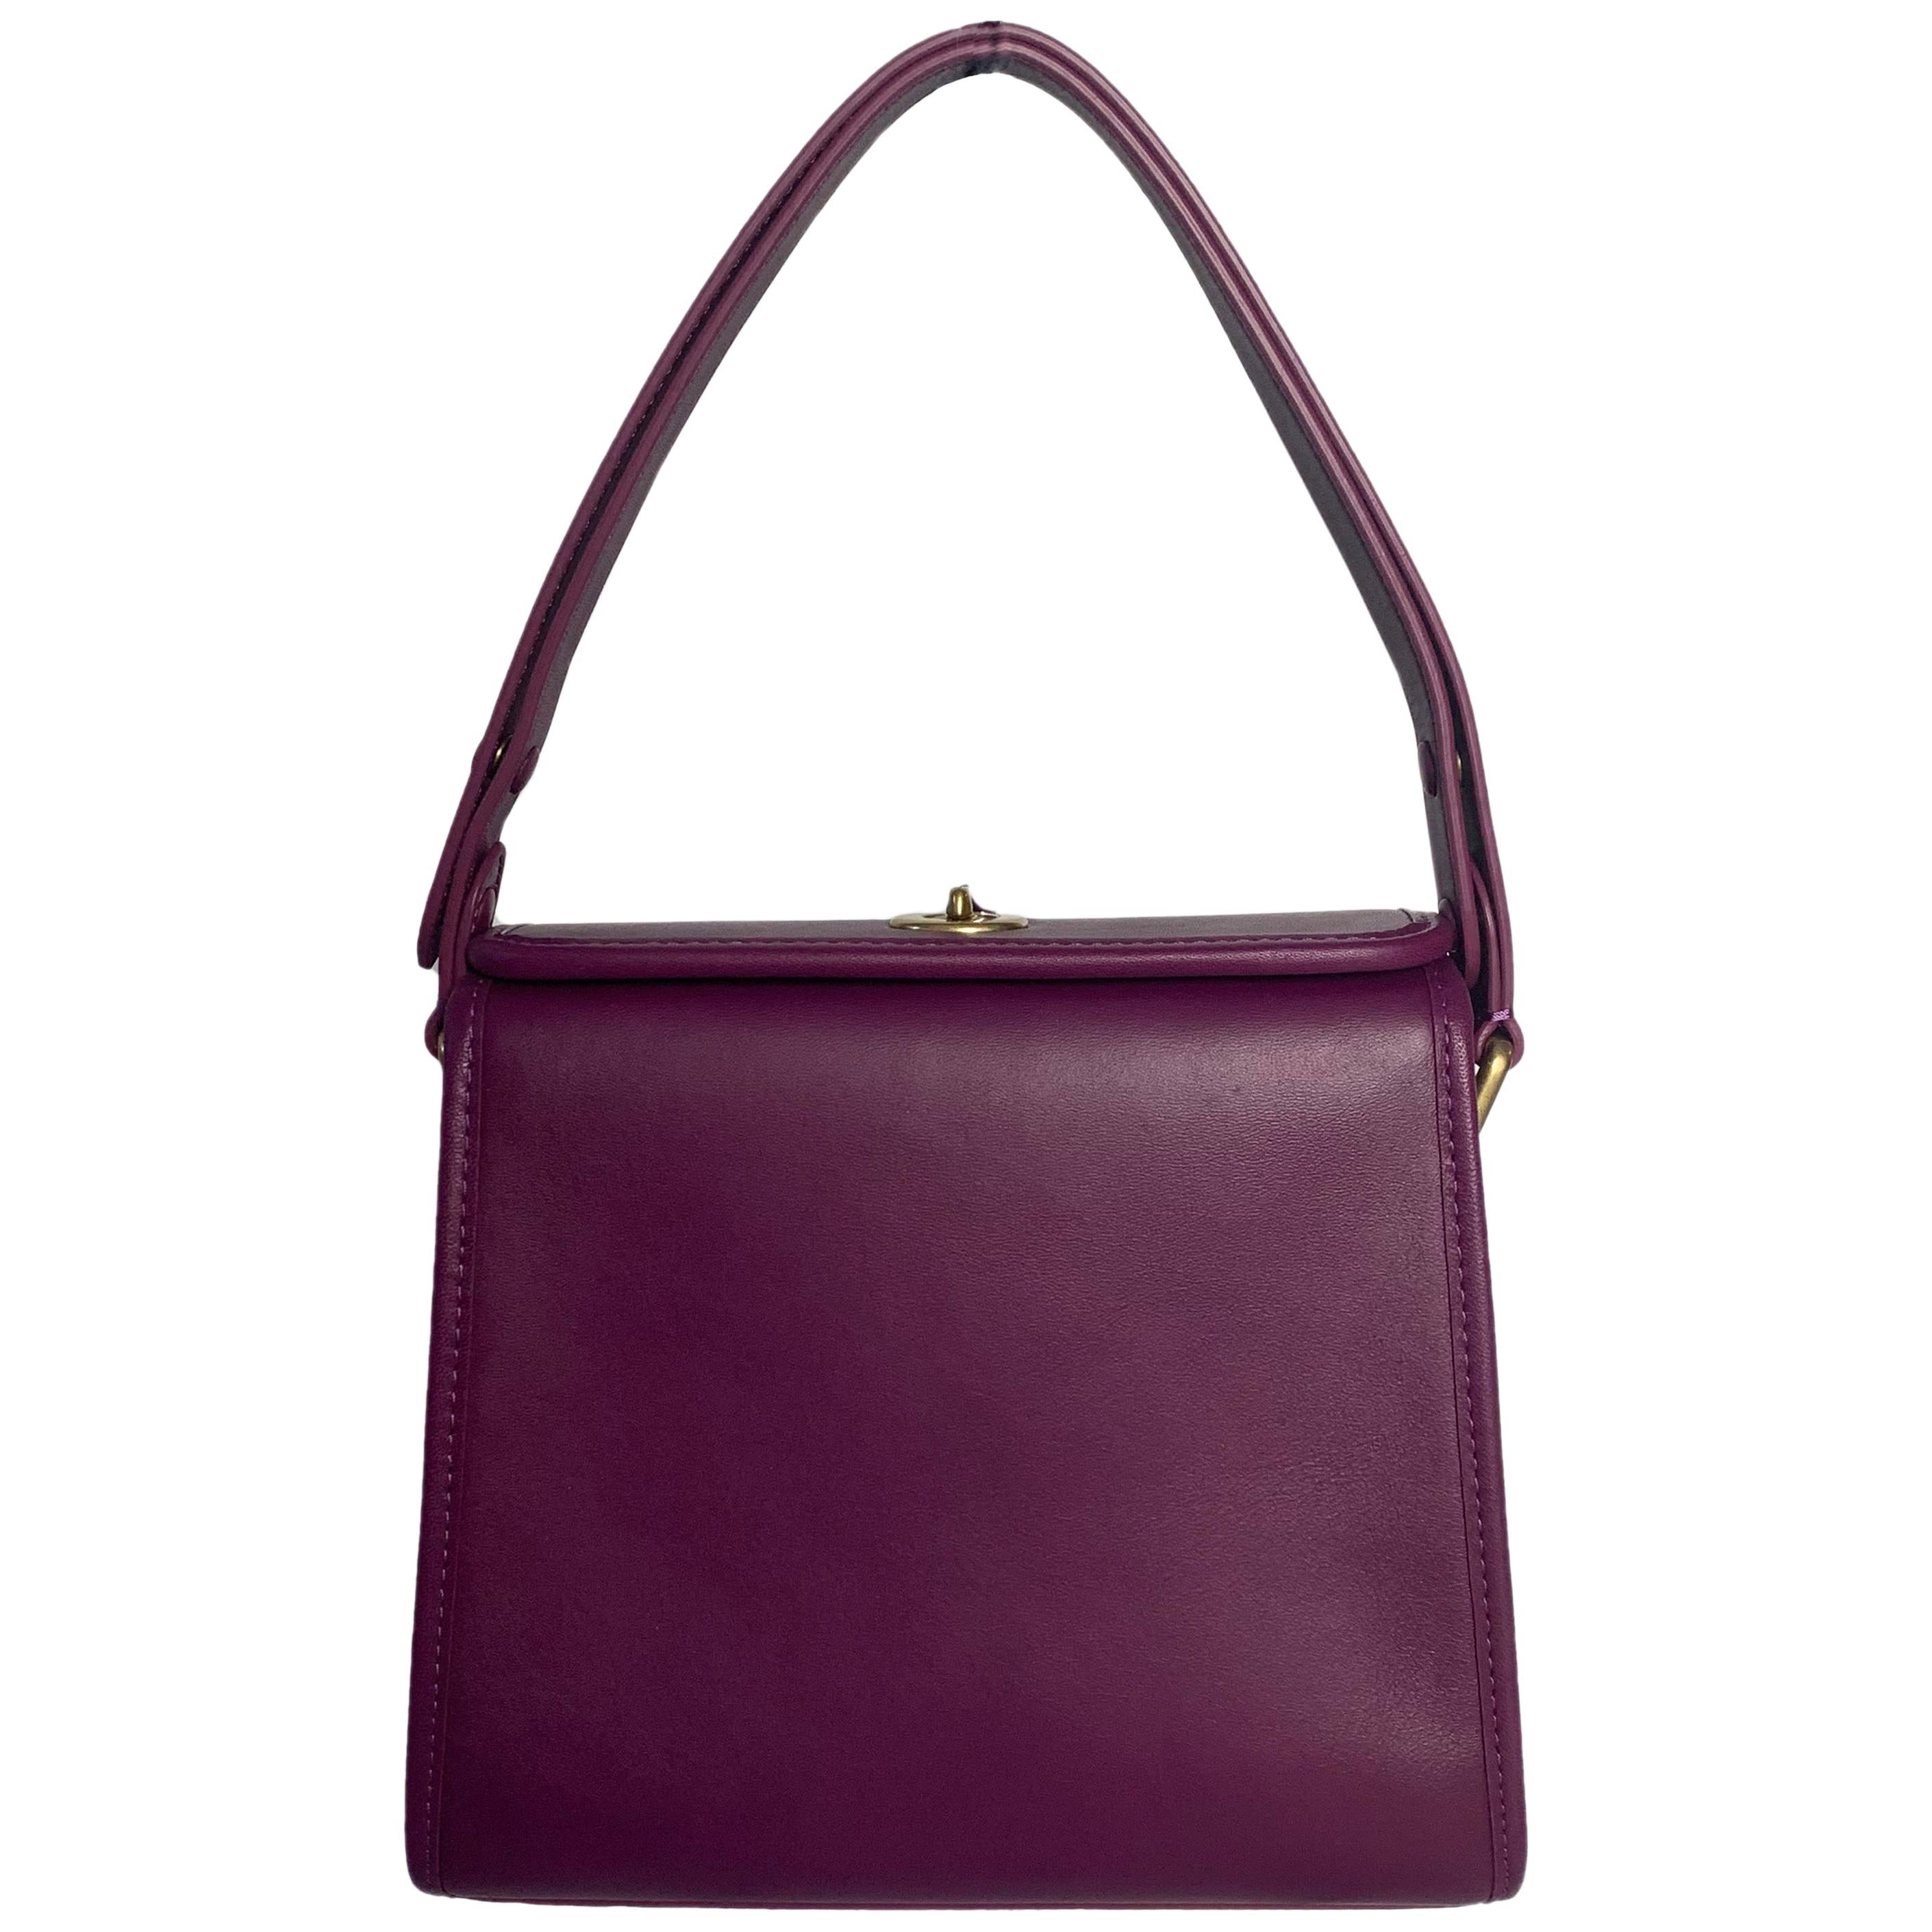 Coach Purple Leather The Originals Turnlock Convertible Shoulder Bag rt. $395